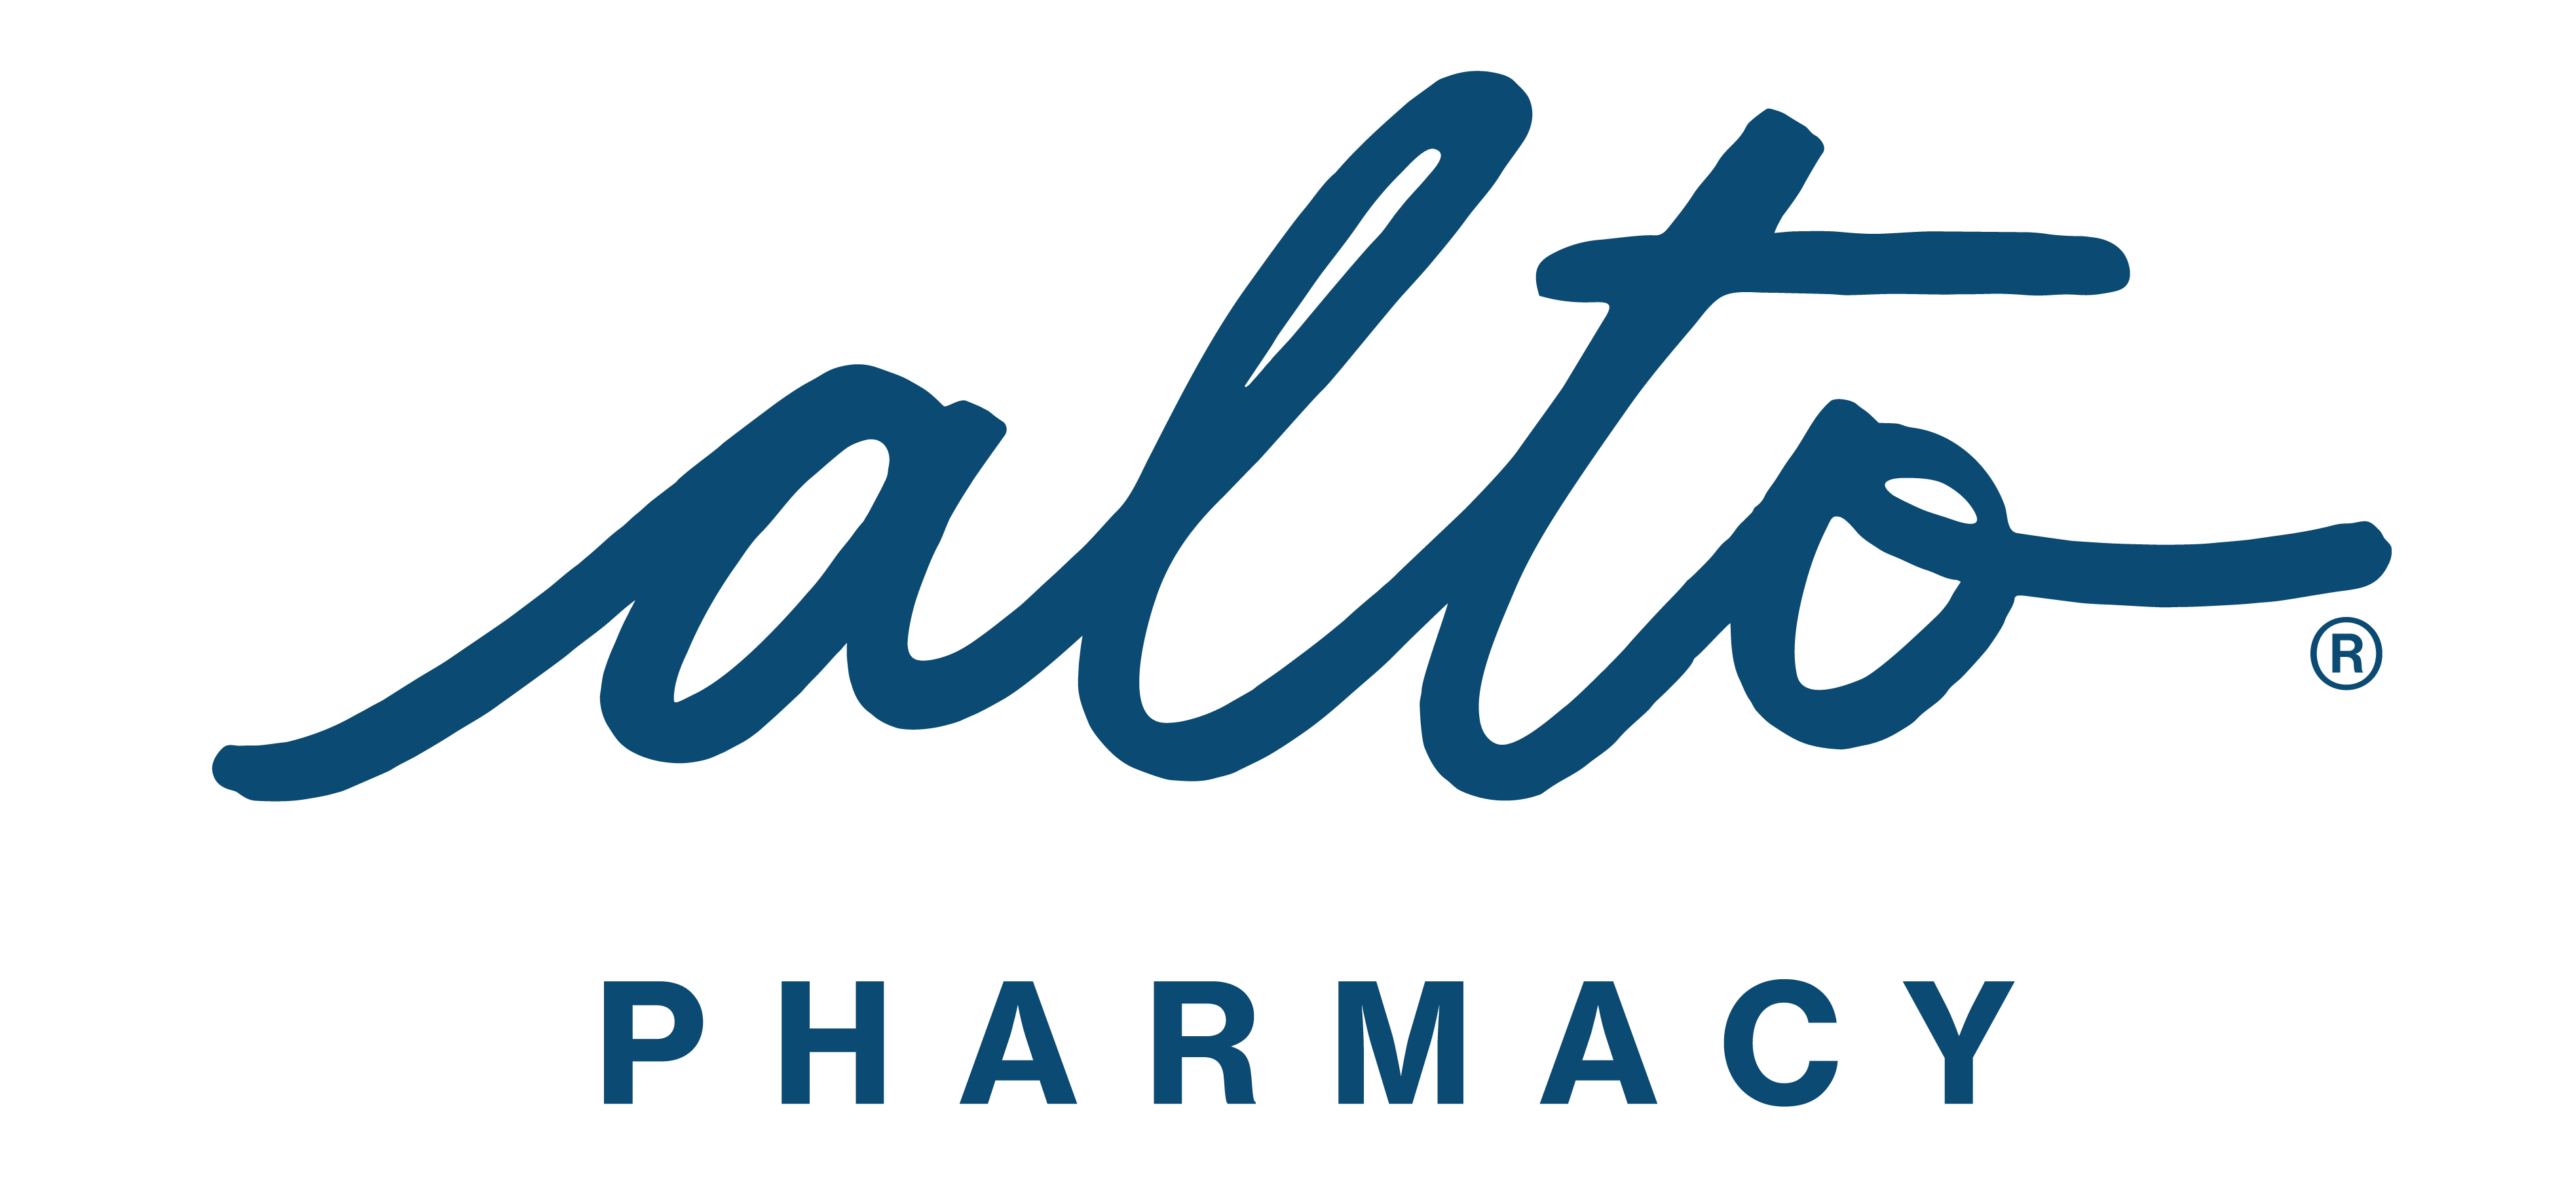 Alto pharmacy logo on a black background.